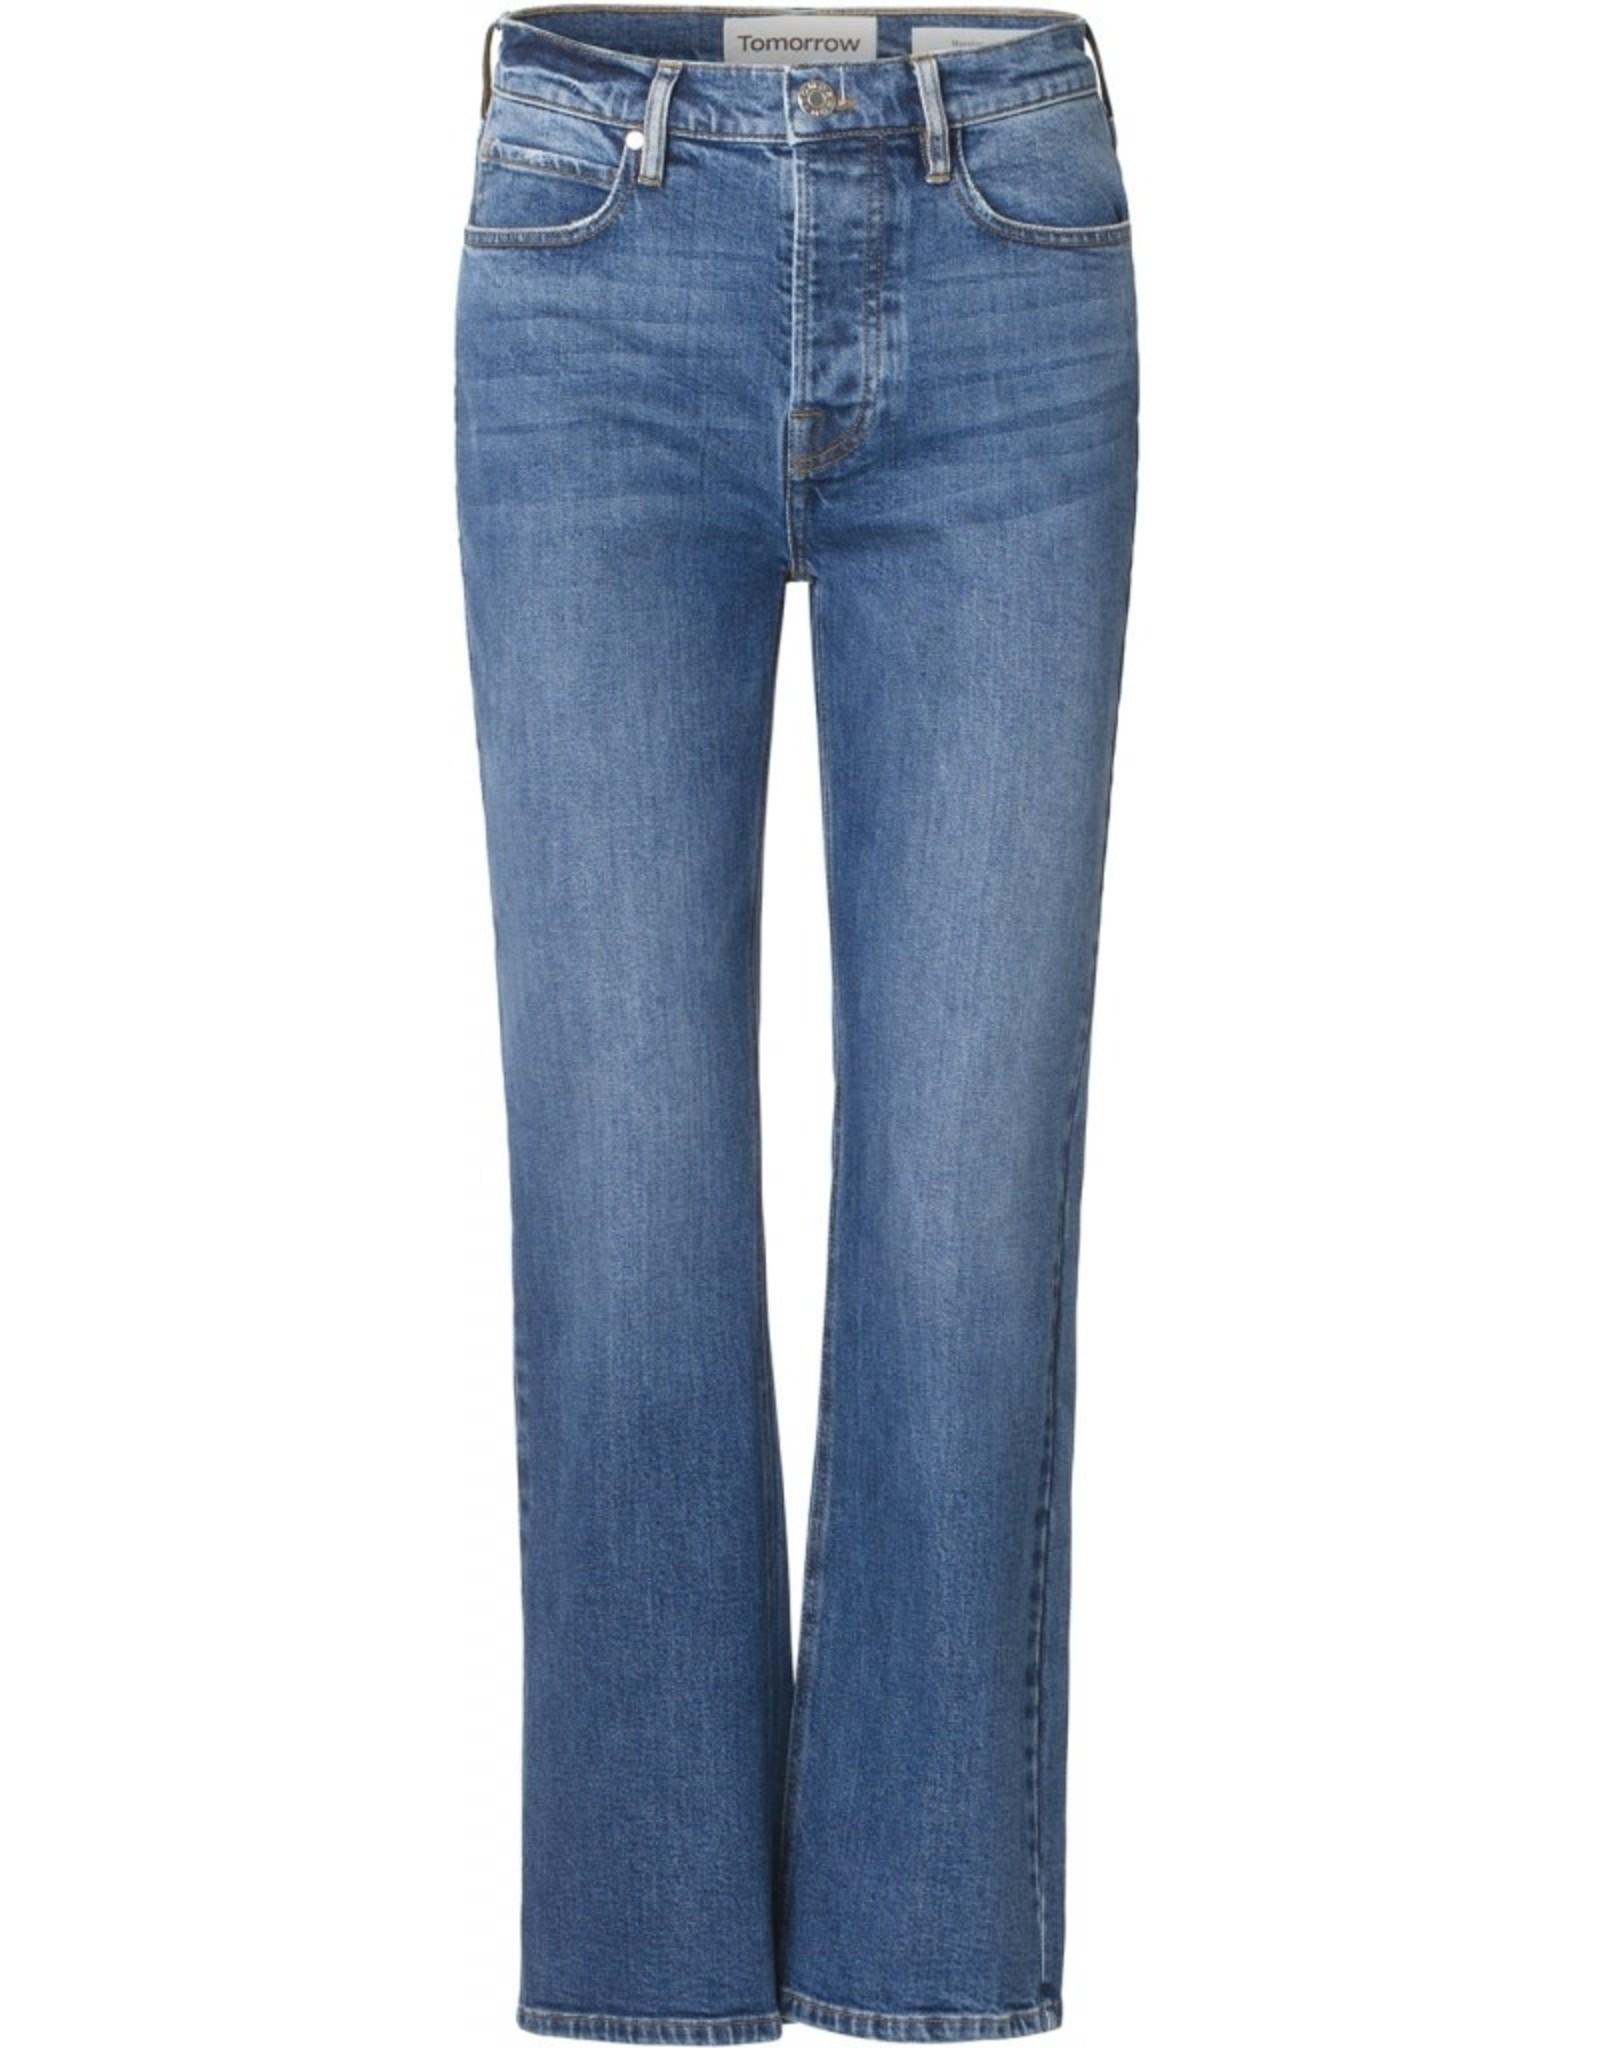 Tomorrow jeans 'Marston' - keywest blue